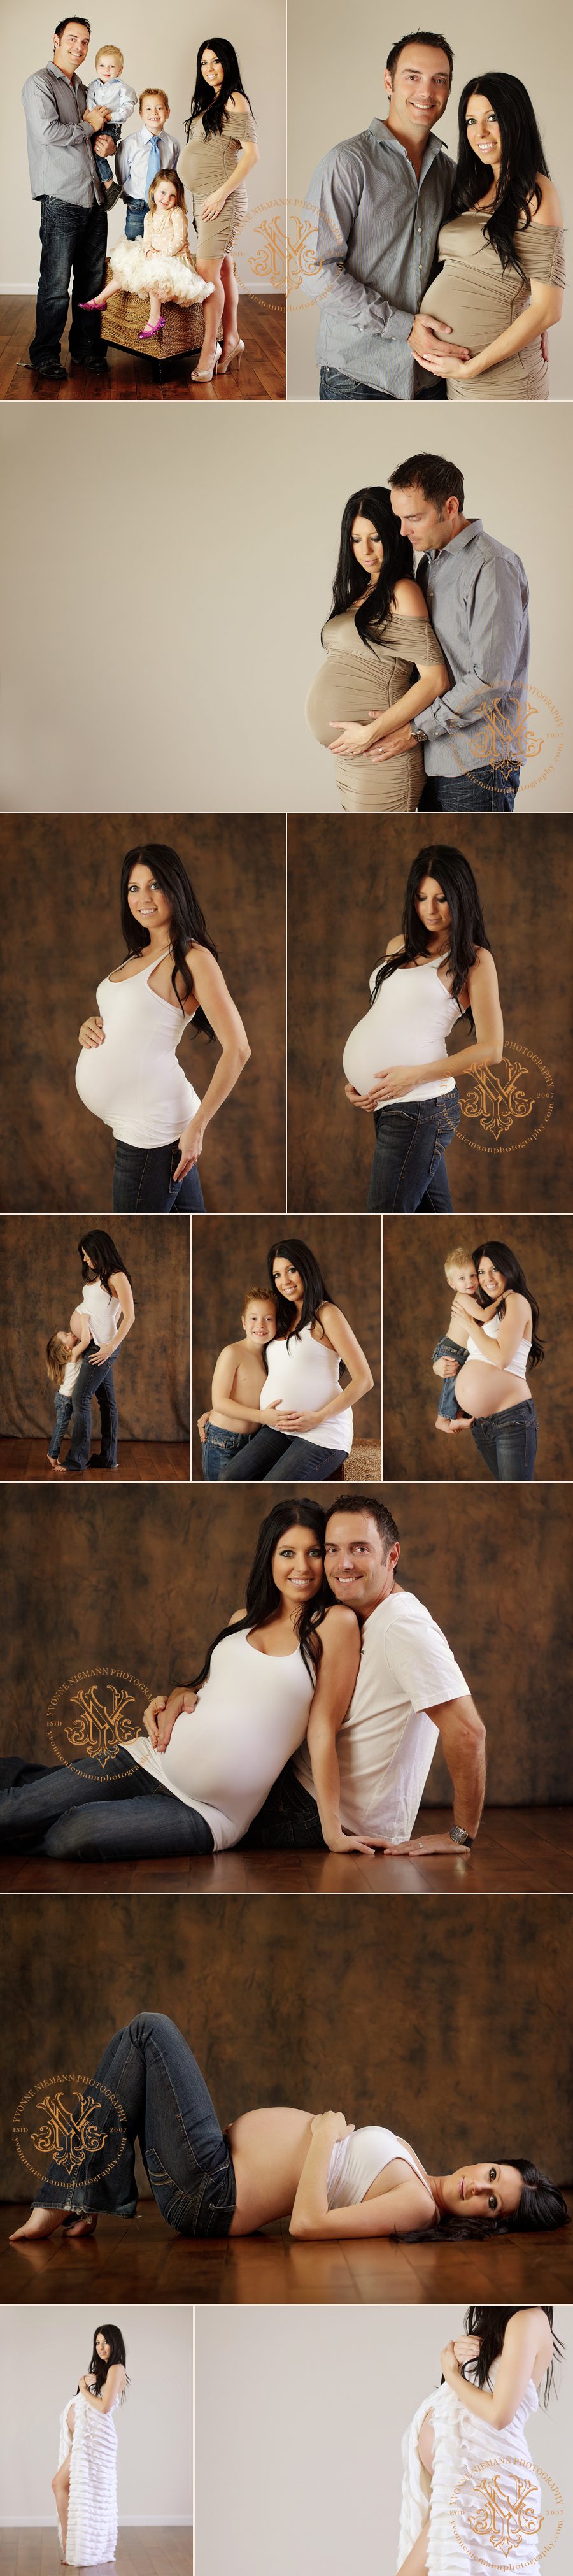 Pregnancy Portraits taken by St. Louis Maternity Photographer, Yvonne Niemann